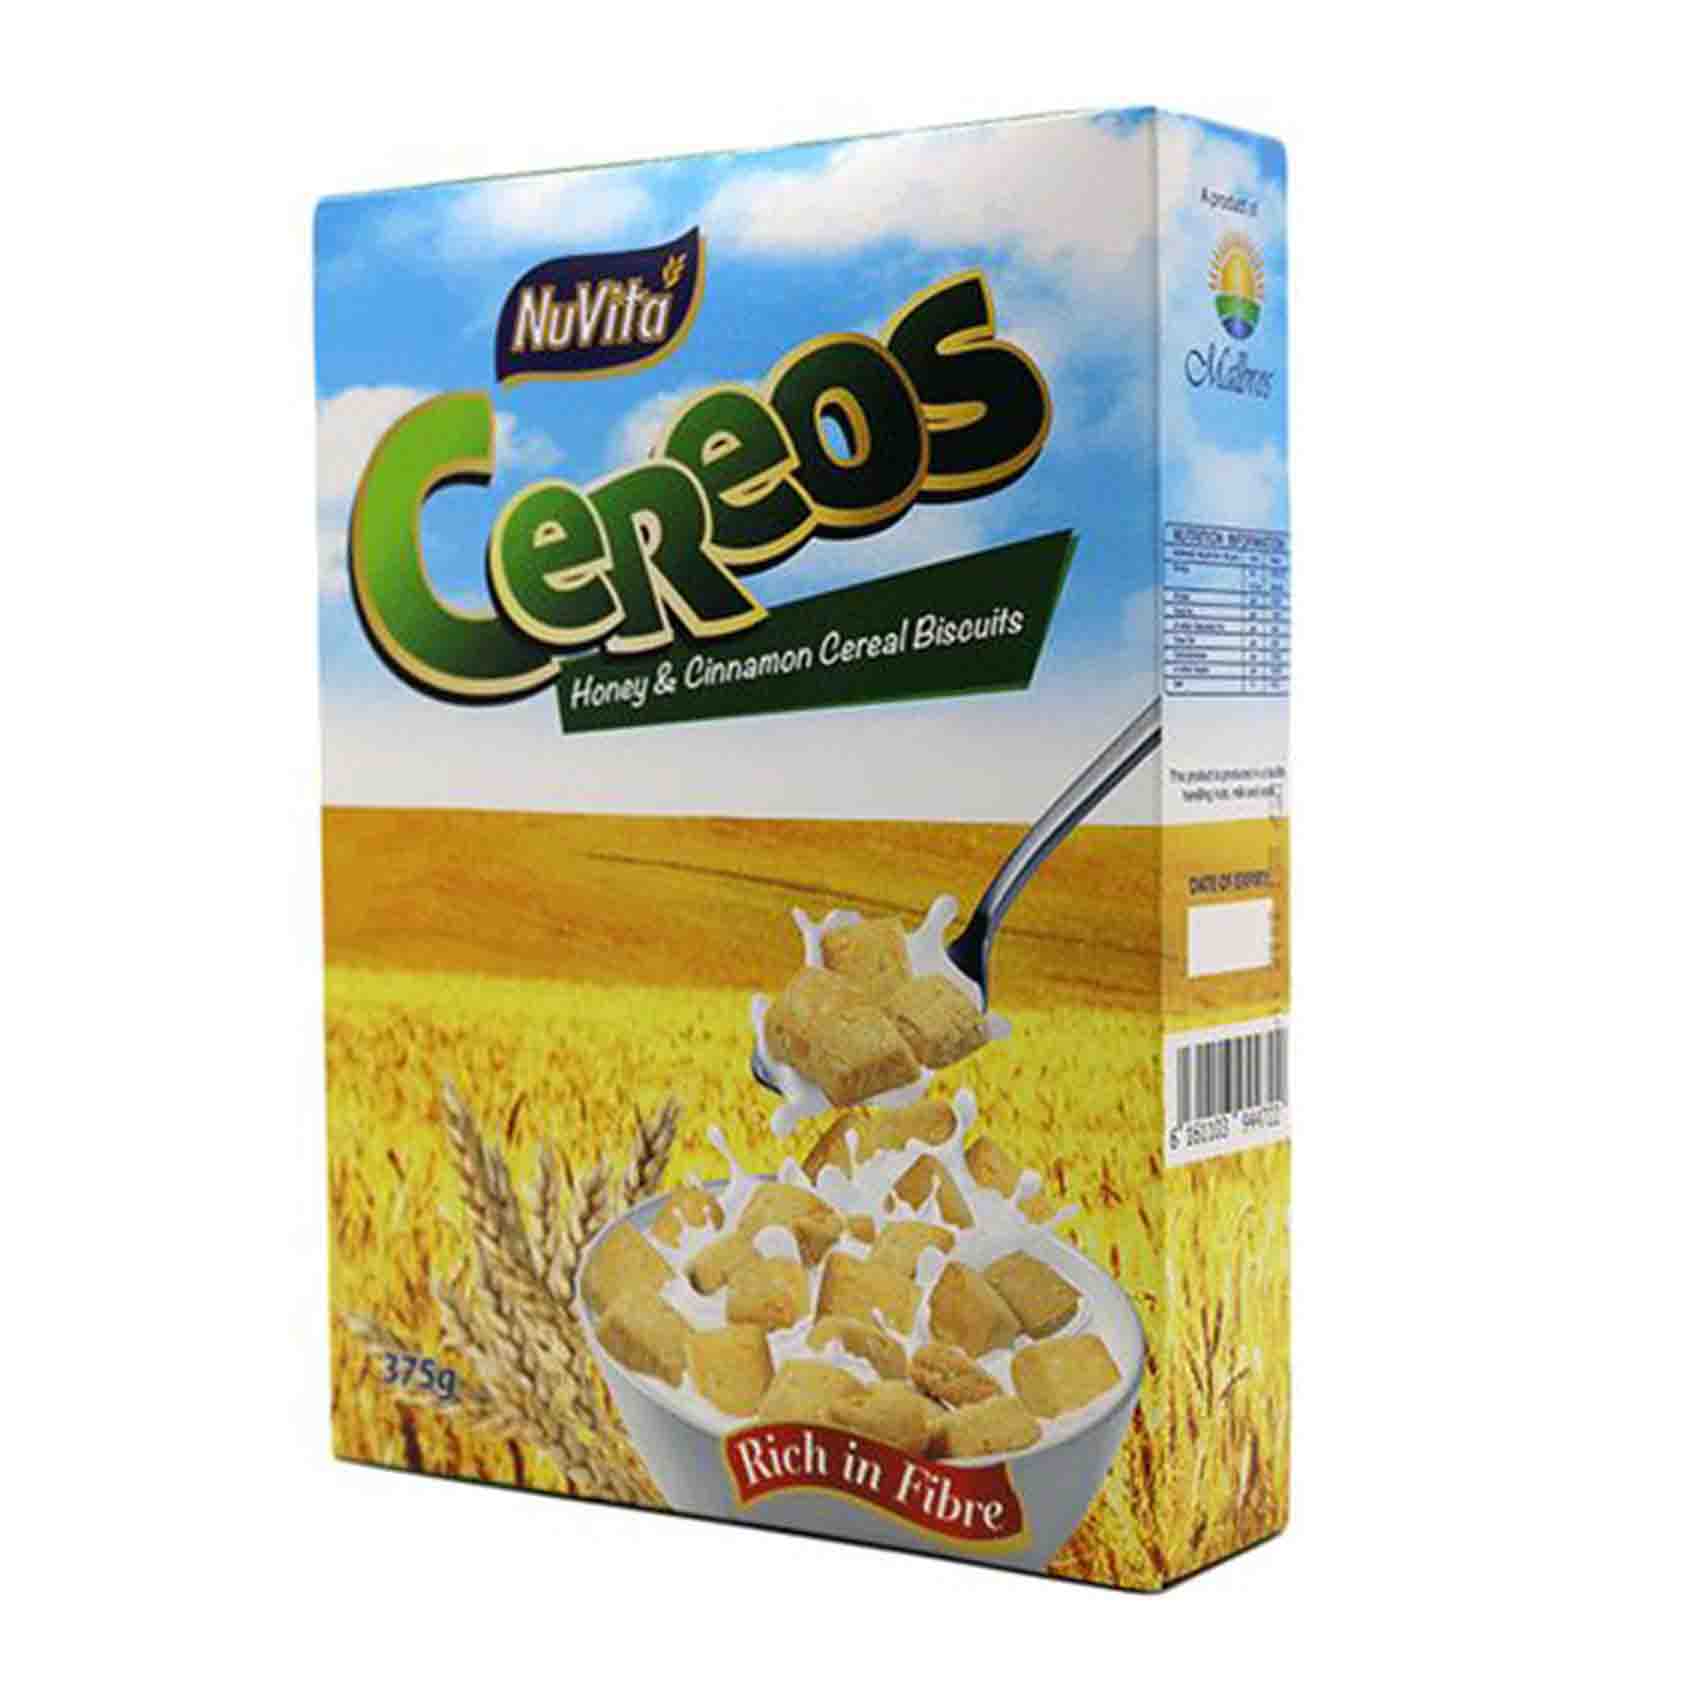 NuVita Cereos Honey &amp; Cinnamon Cereal 375g